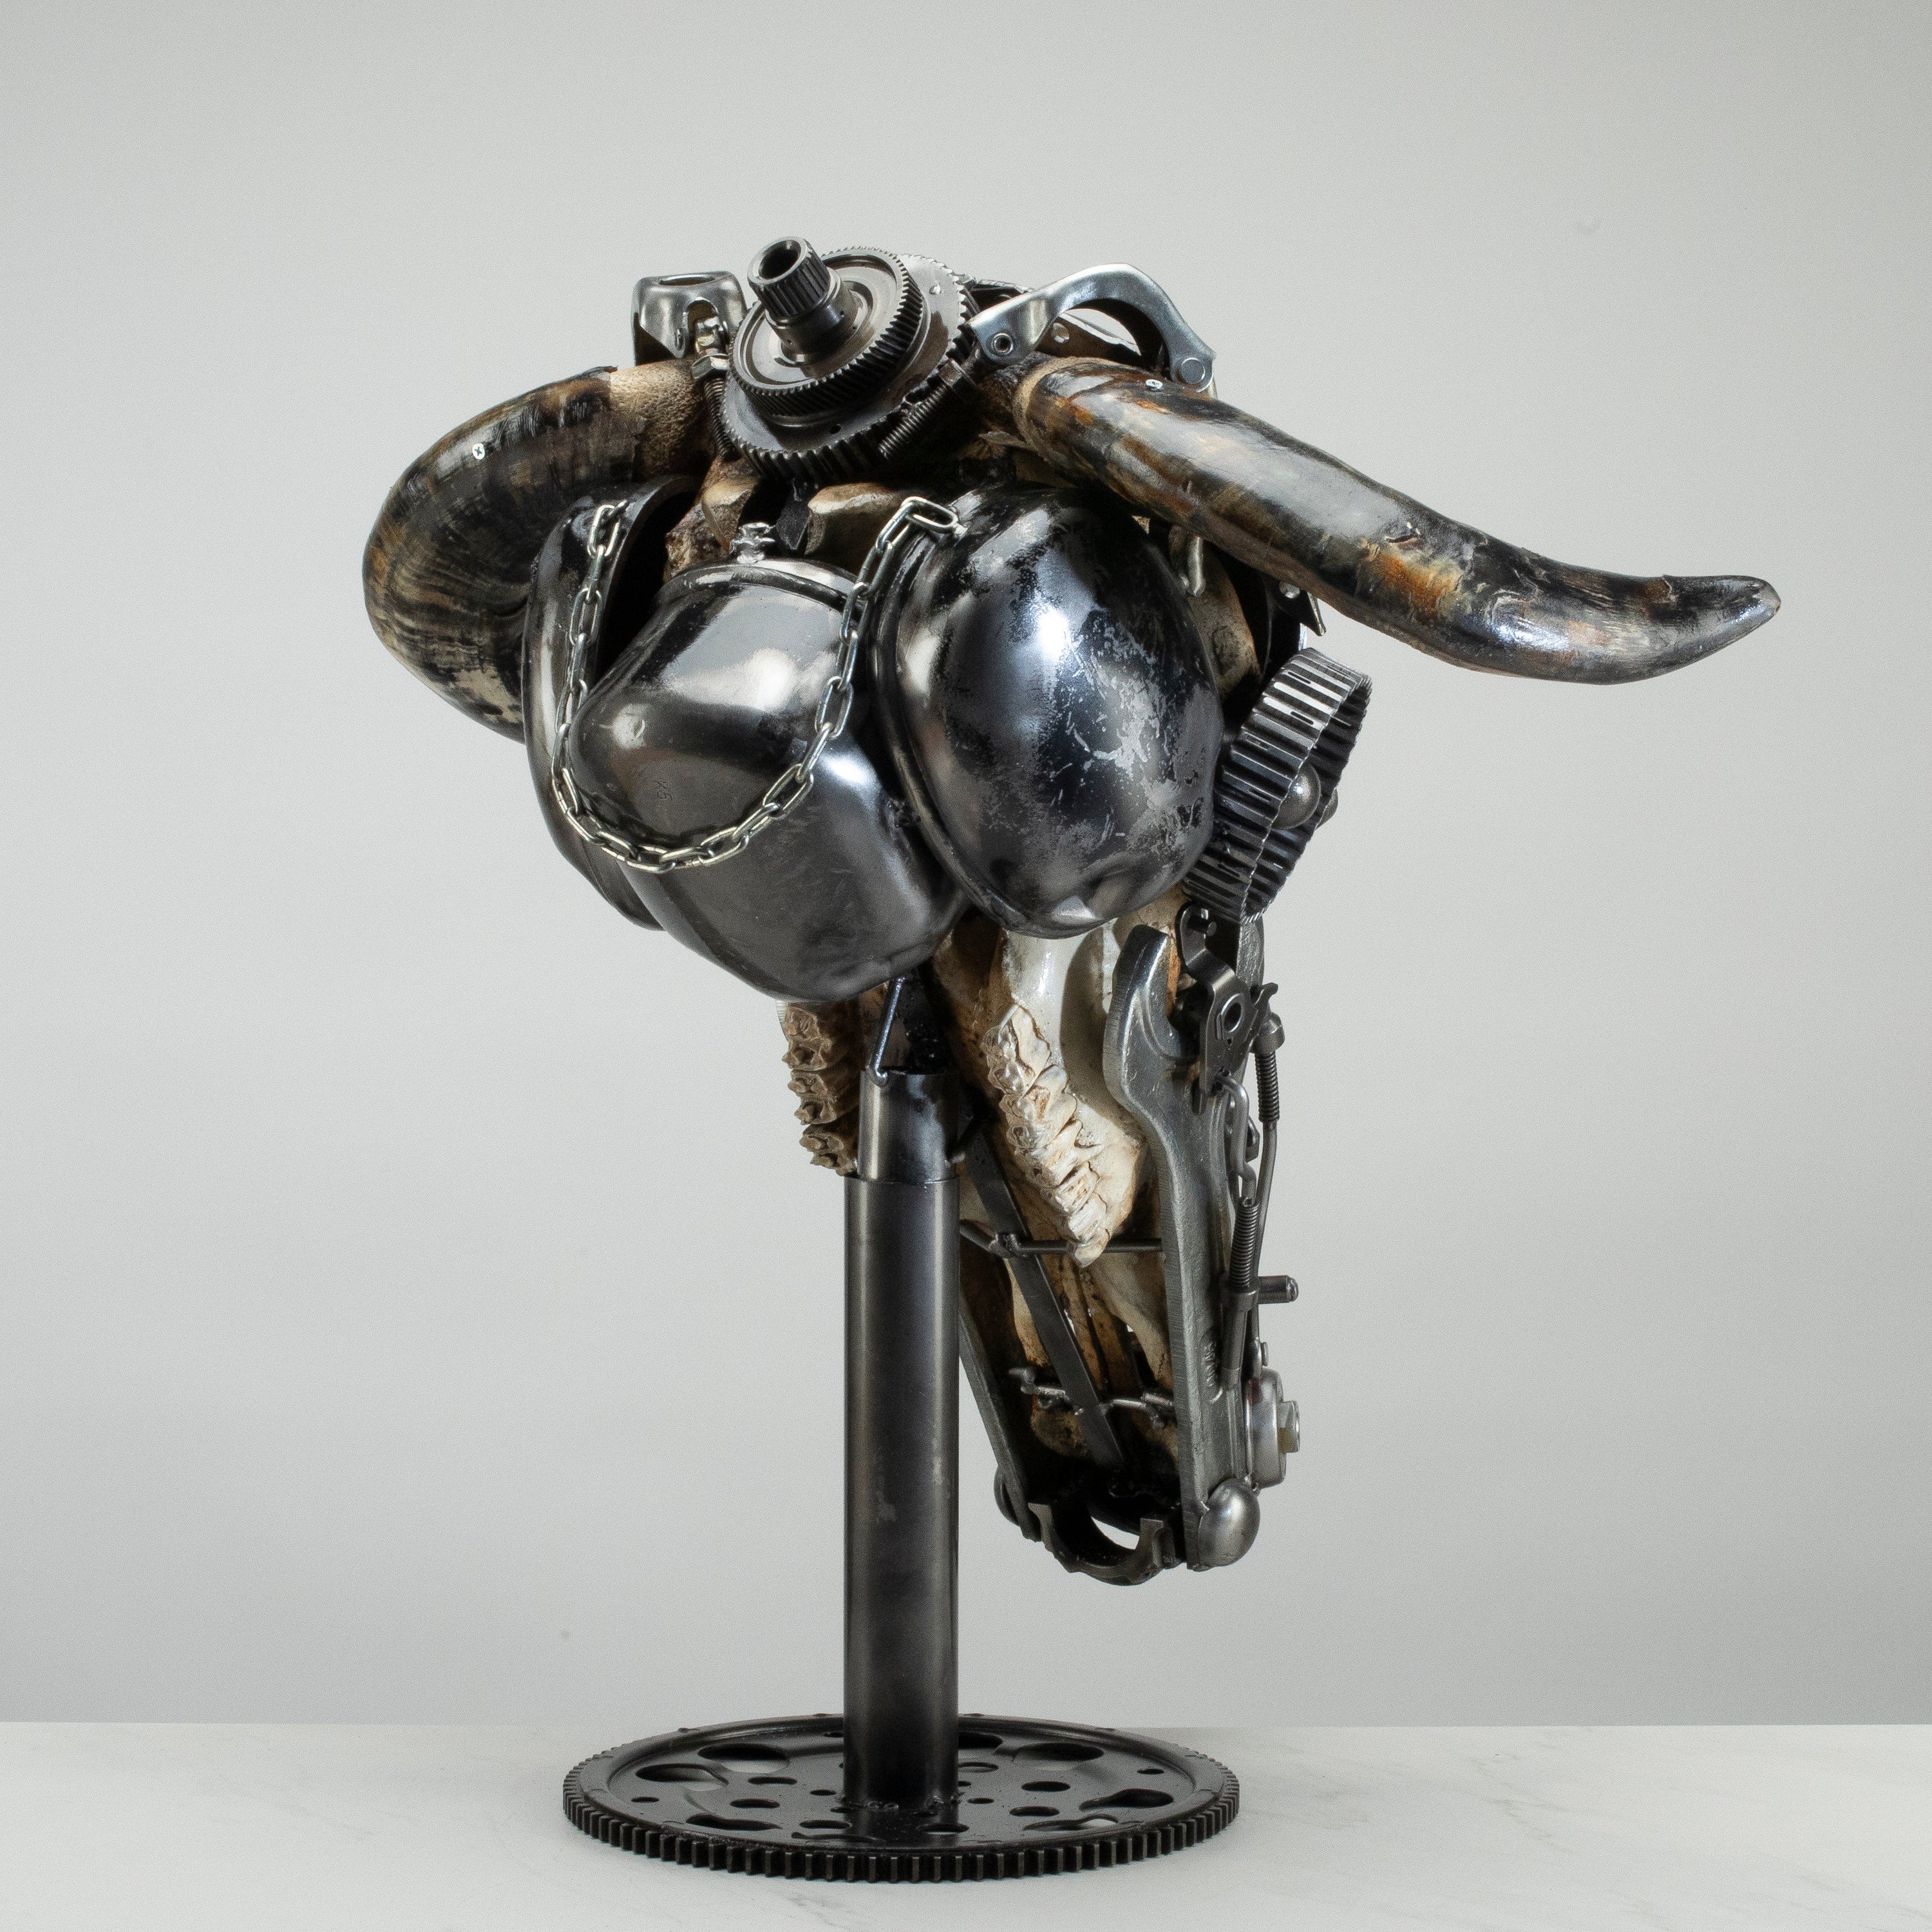 Kalifano Recycled Metal Art Bull Skull Recycled Metal Art Sculpture RMS-BSK-S146